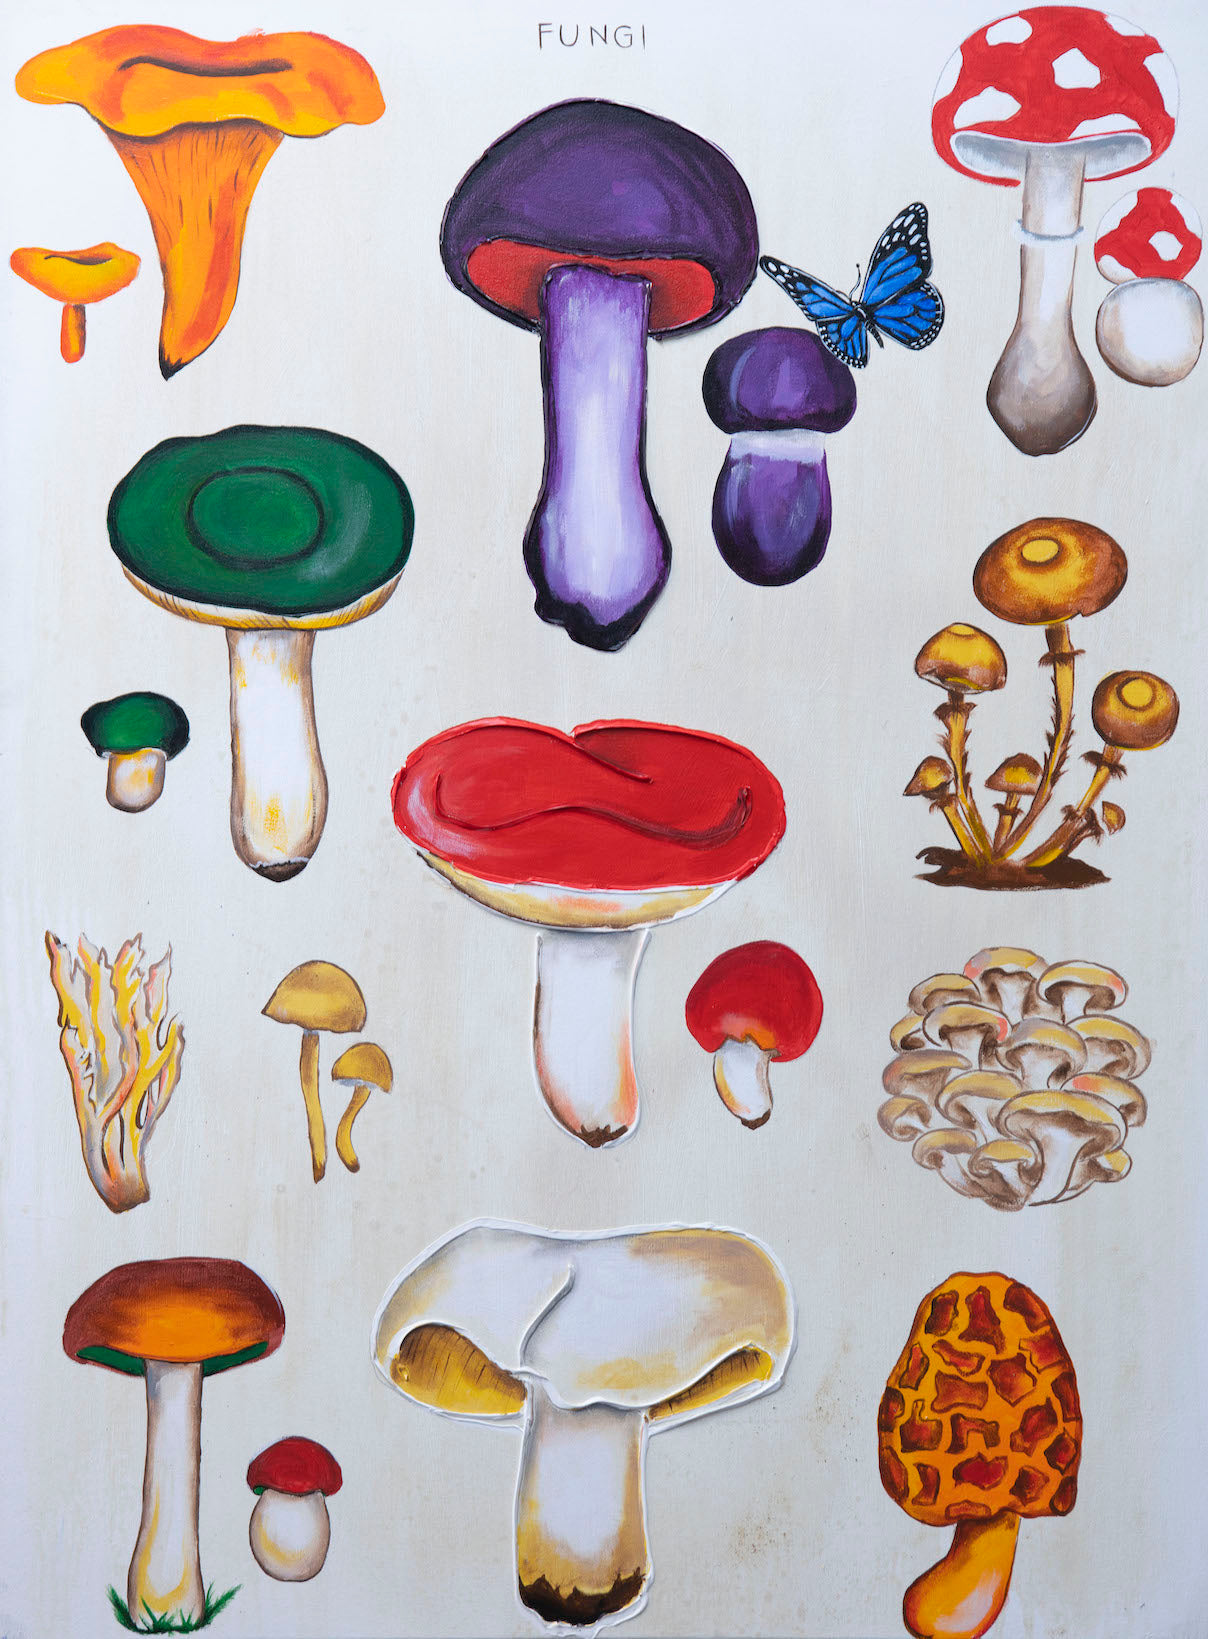 "Fungi"